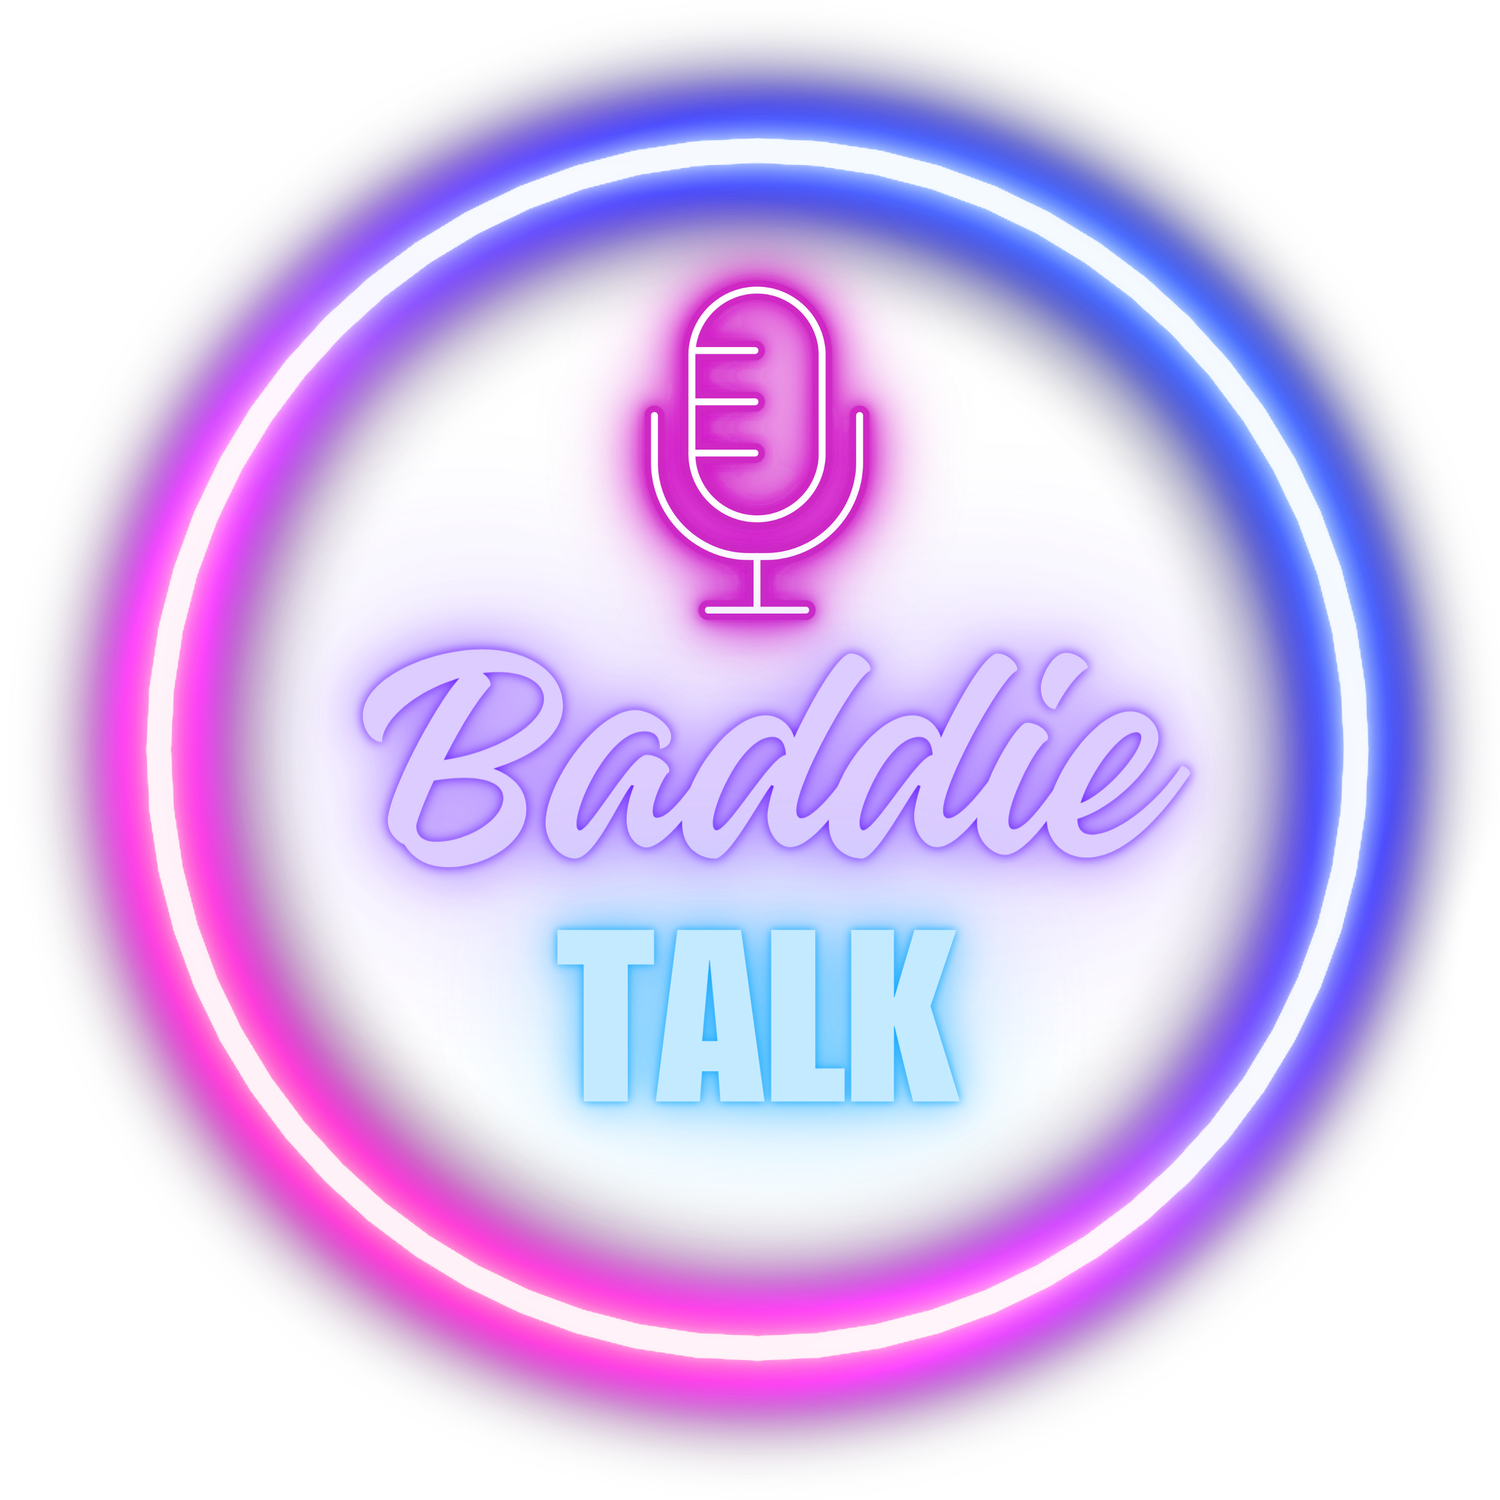 BADDIE TALK